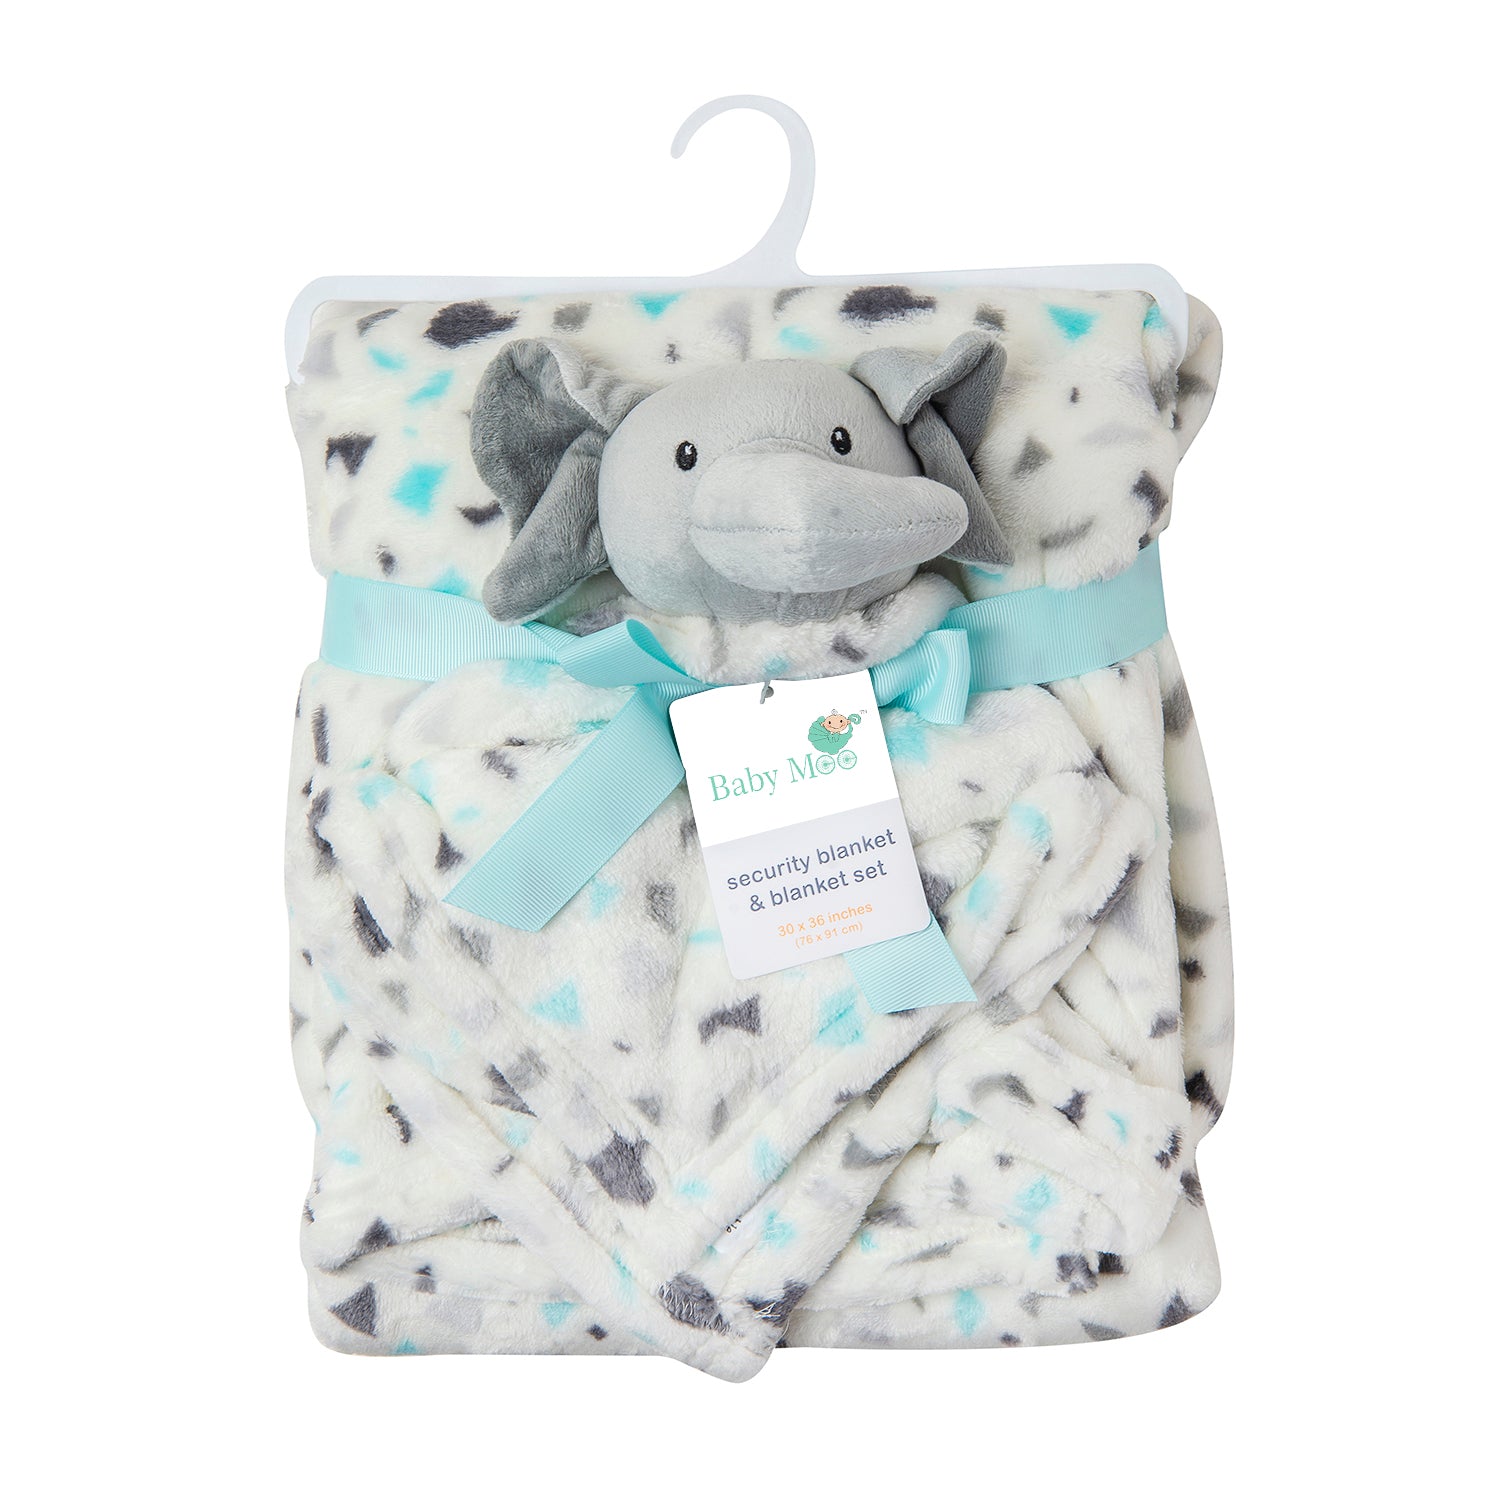 Baby Moo Elephant Hearts Soft Cozy Plush Toy Blanket Blue